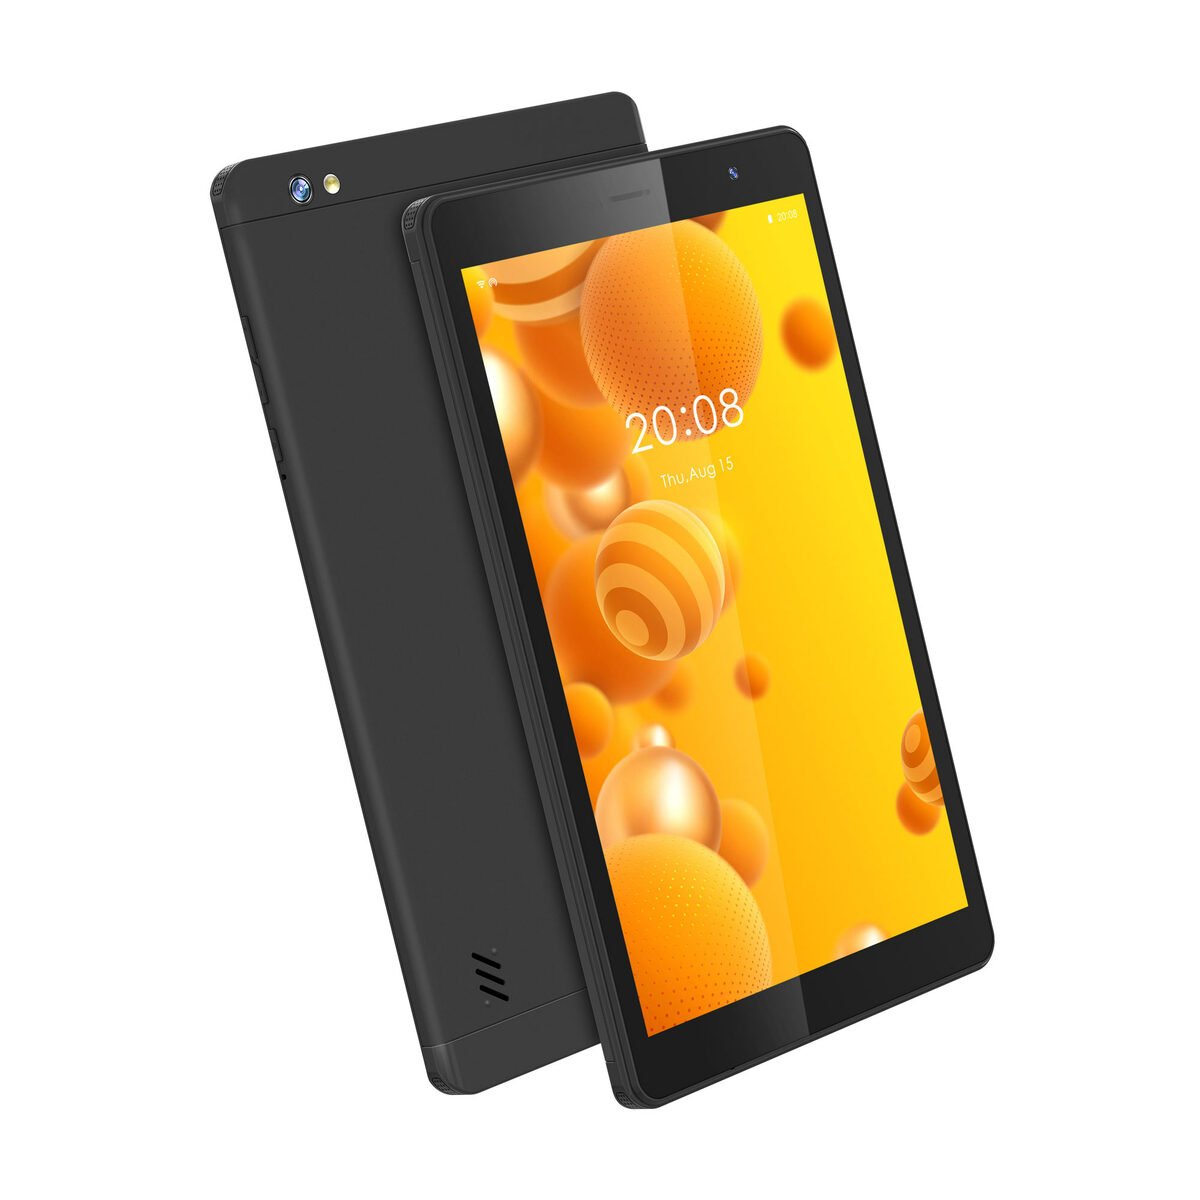 G-tab Tablet F8, 4G, Quad-Core, 2GB RAM, 16GB Memory, 8 inches Display, Android 10.0 Go, Black